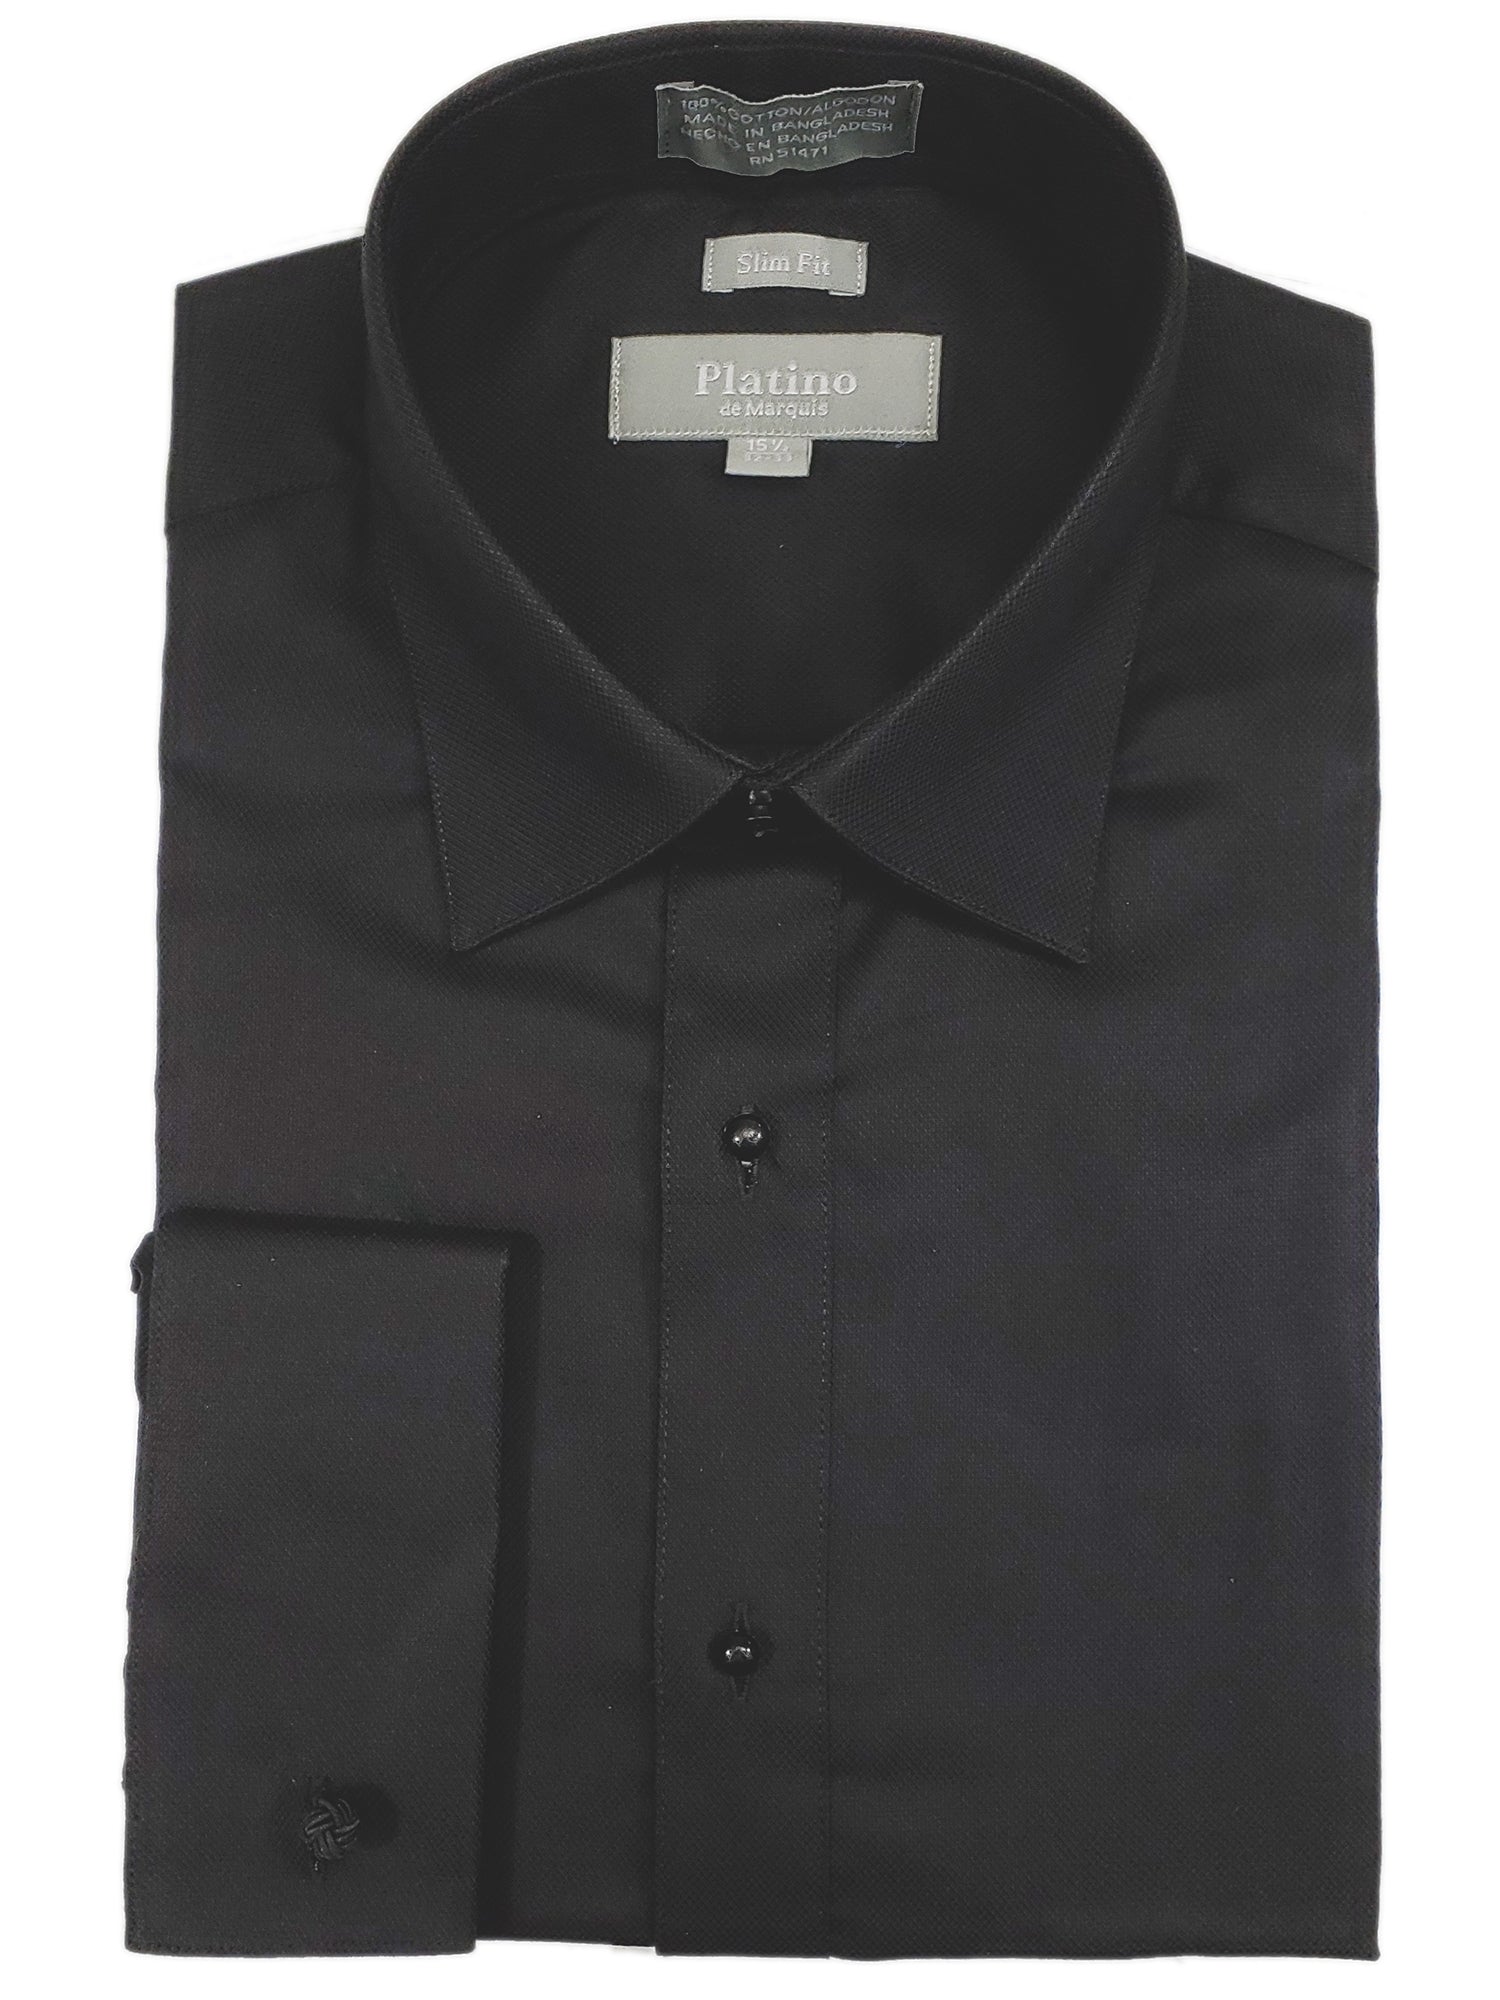 Marquis Men's Textured Slim Fit French Cuff Lay down Cotton Tuxedo Shirt Dress Shirt Marquis Black 15.5 Neck 32/33 Sleeve 